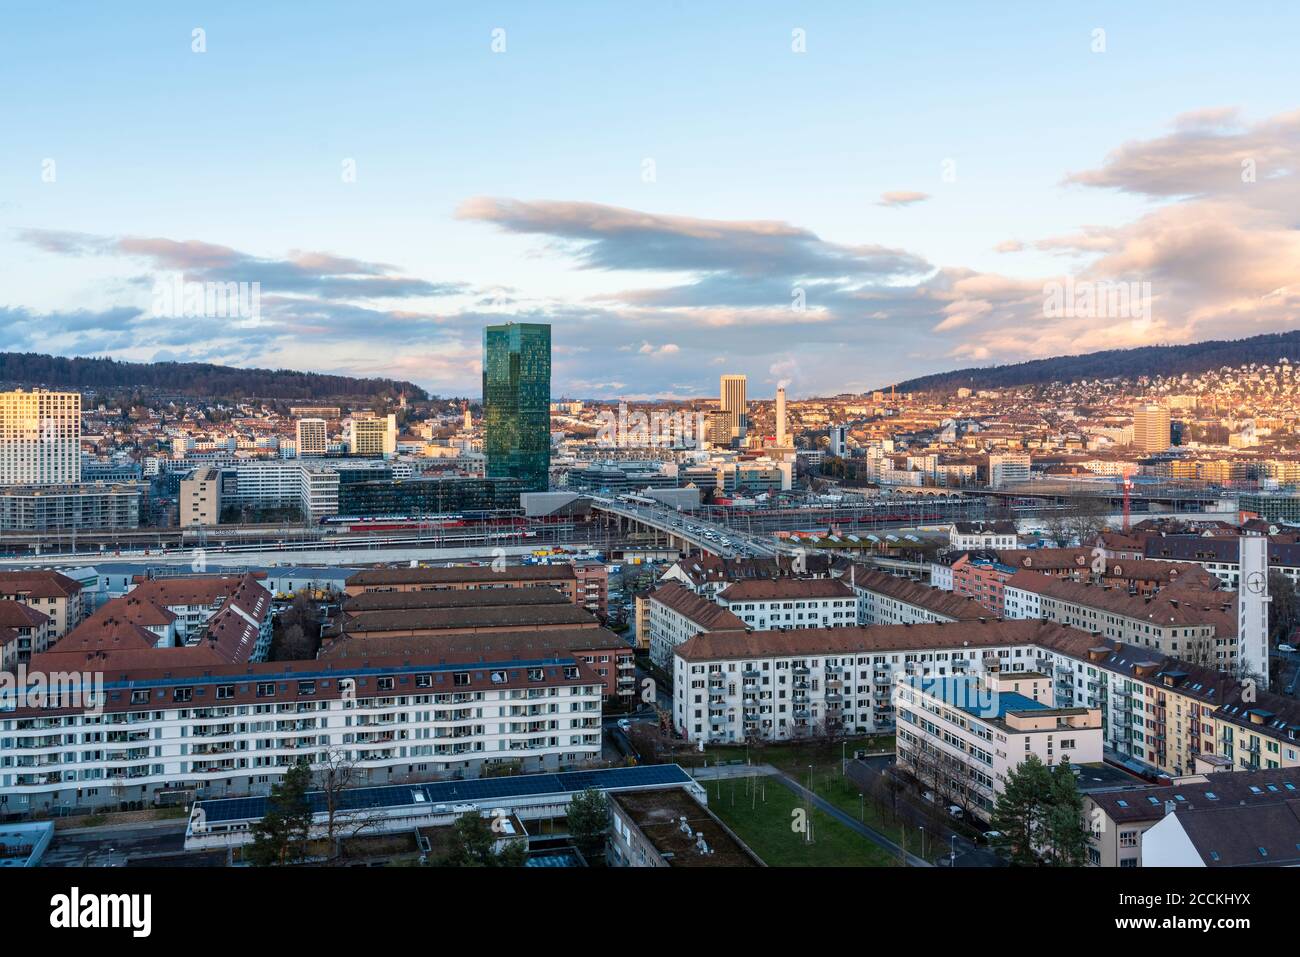 Switzerland, Zurich, Apartment buildings, aerial view Stock Photo